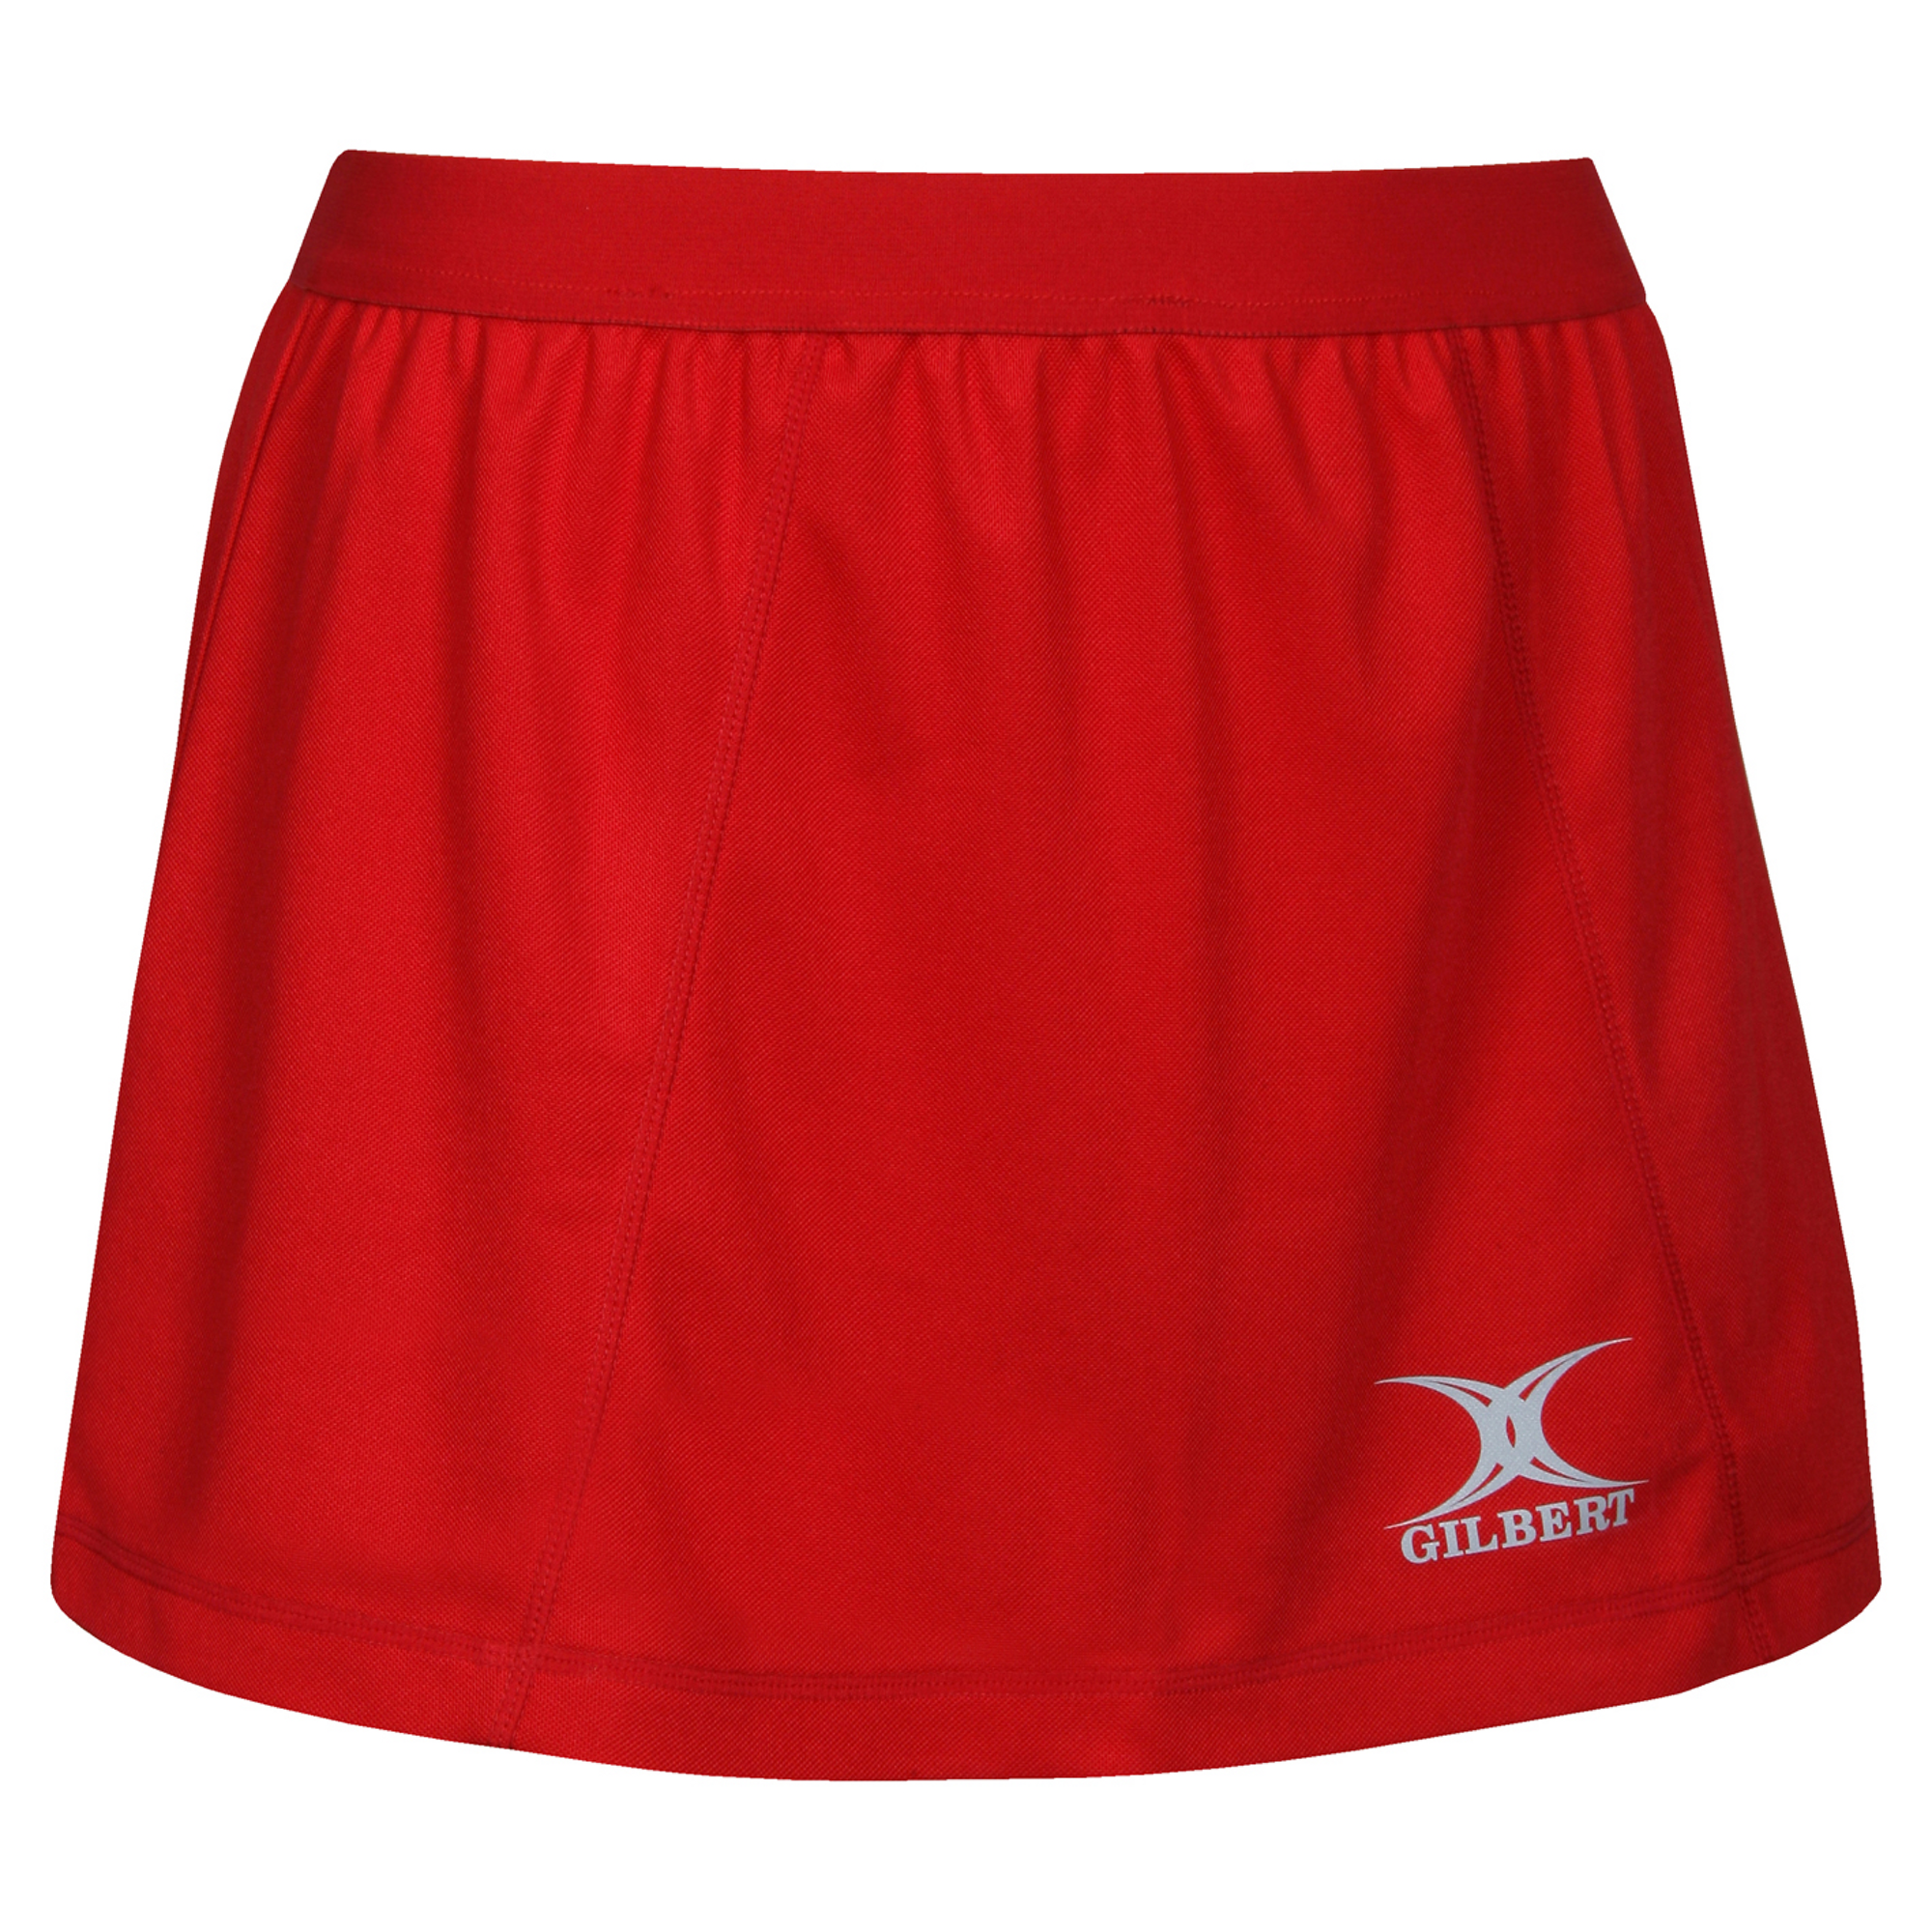 Gilbert Blaze Netball Skirt 10 Red